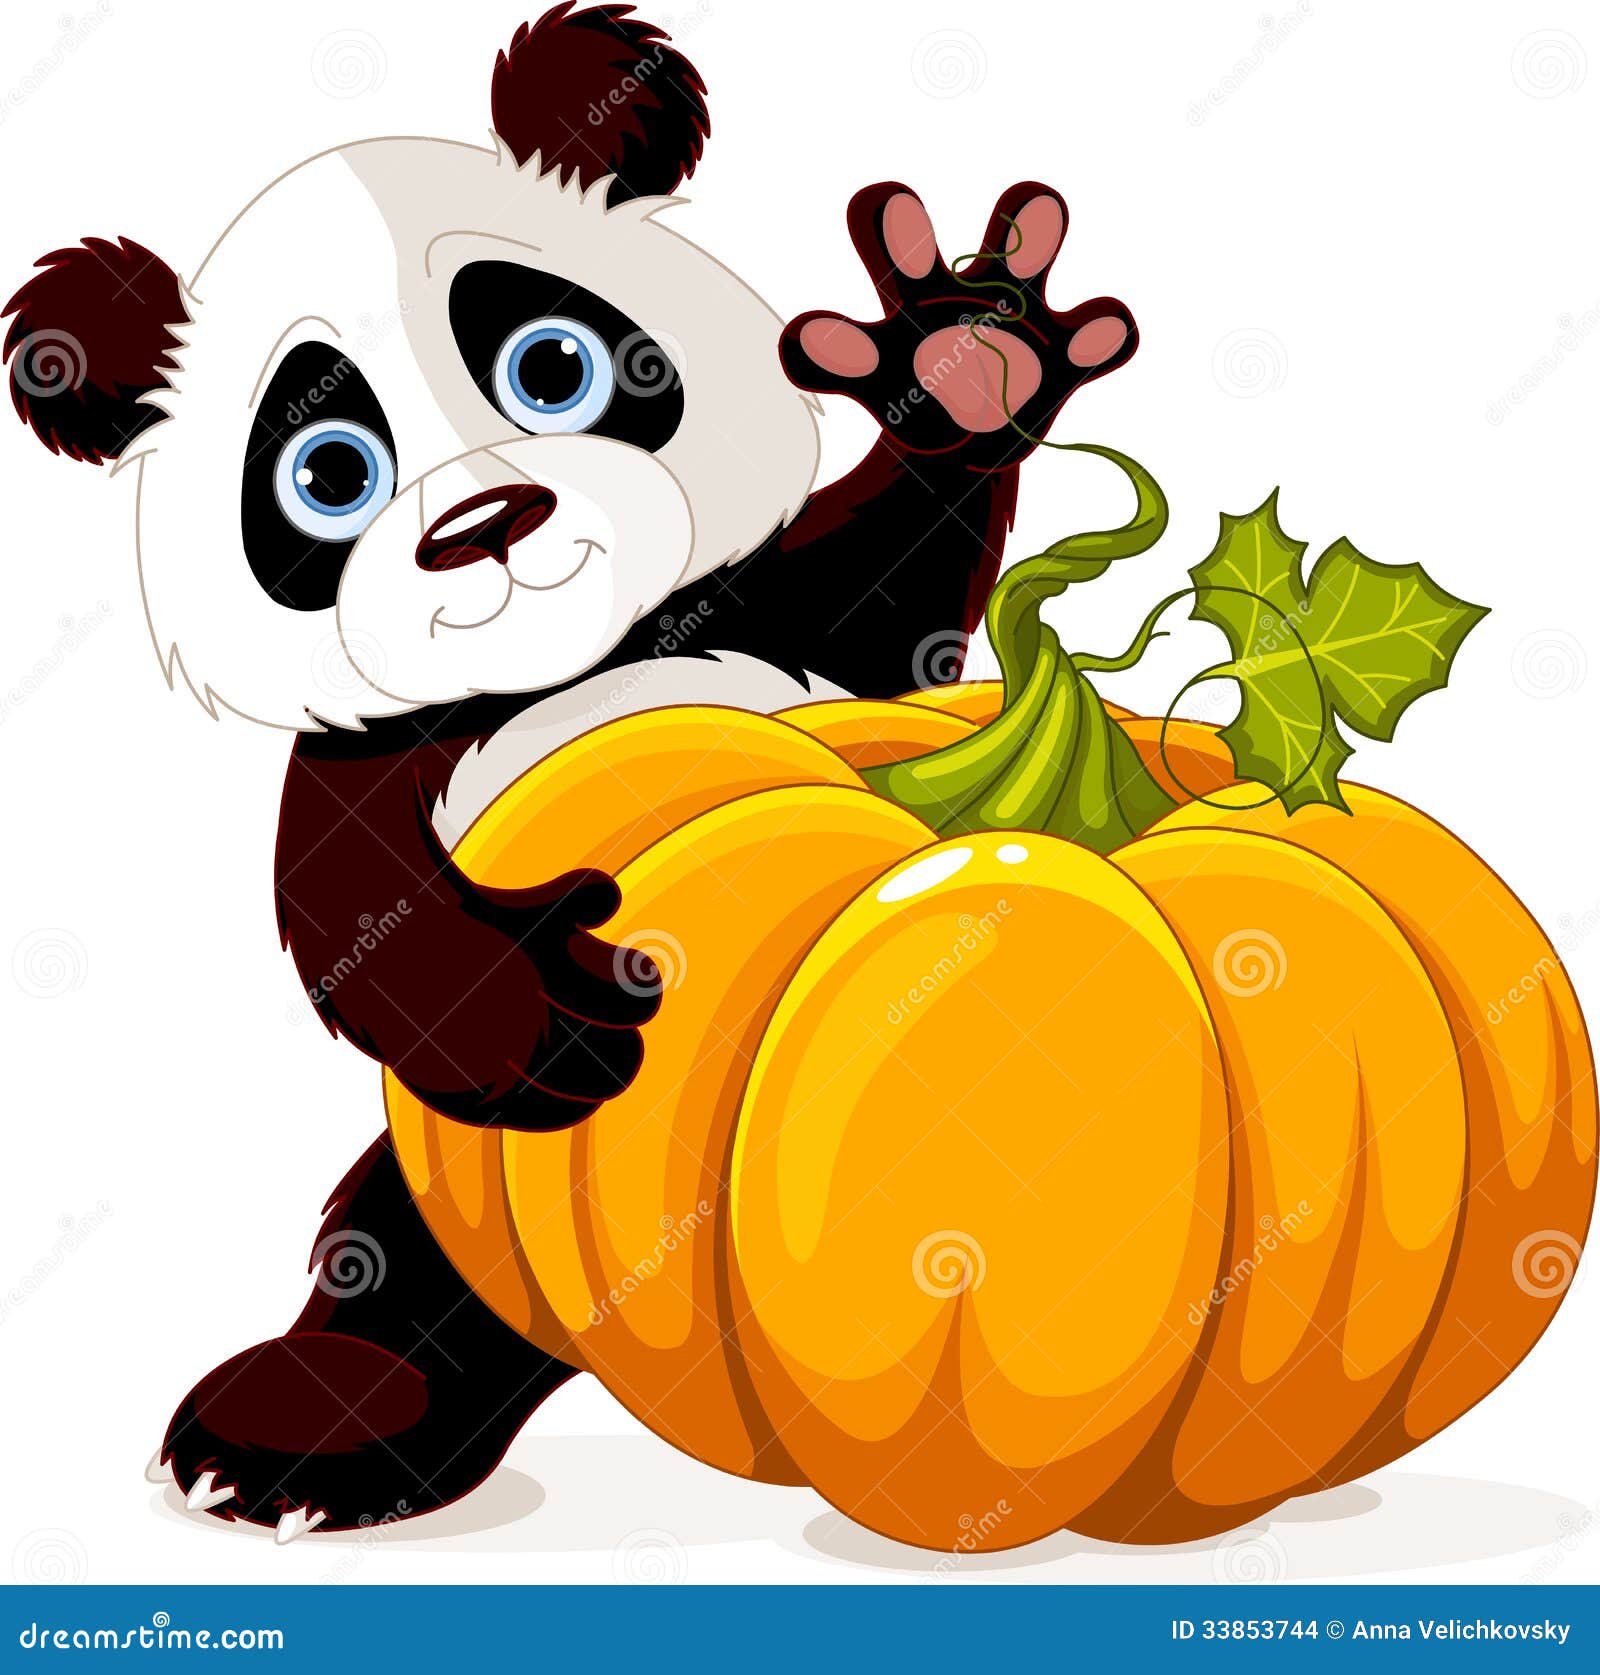 clipart panda thanksgiving - photo #20